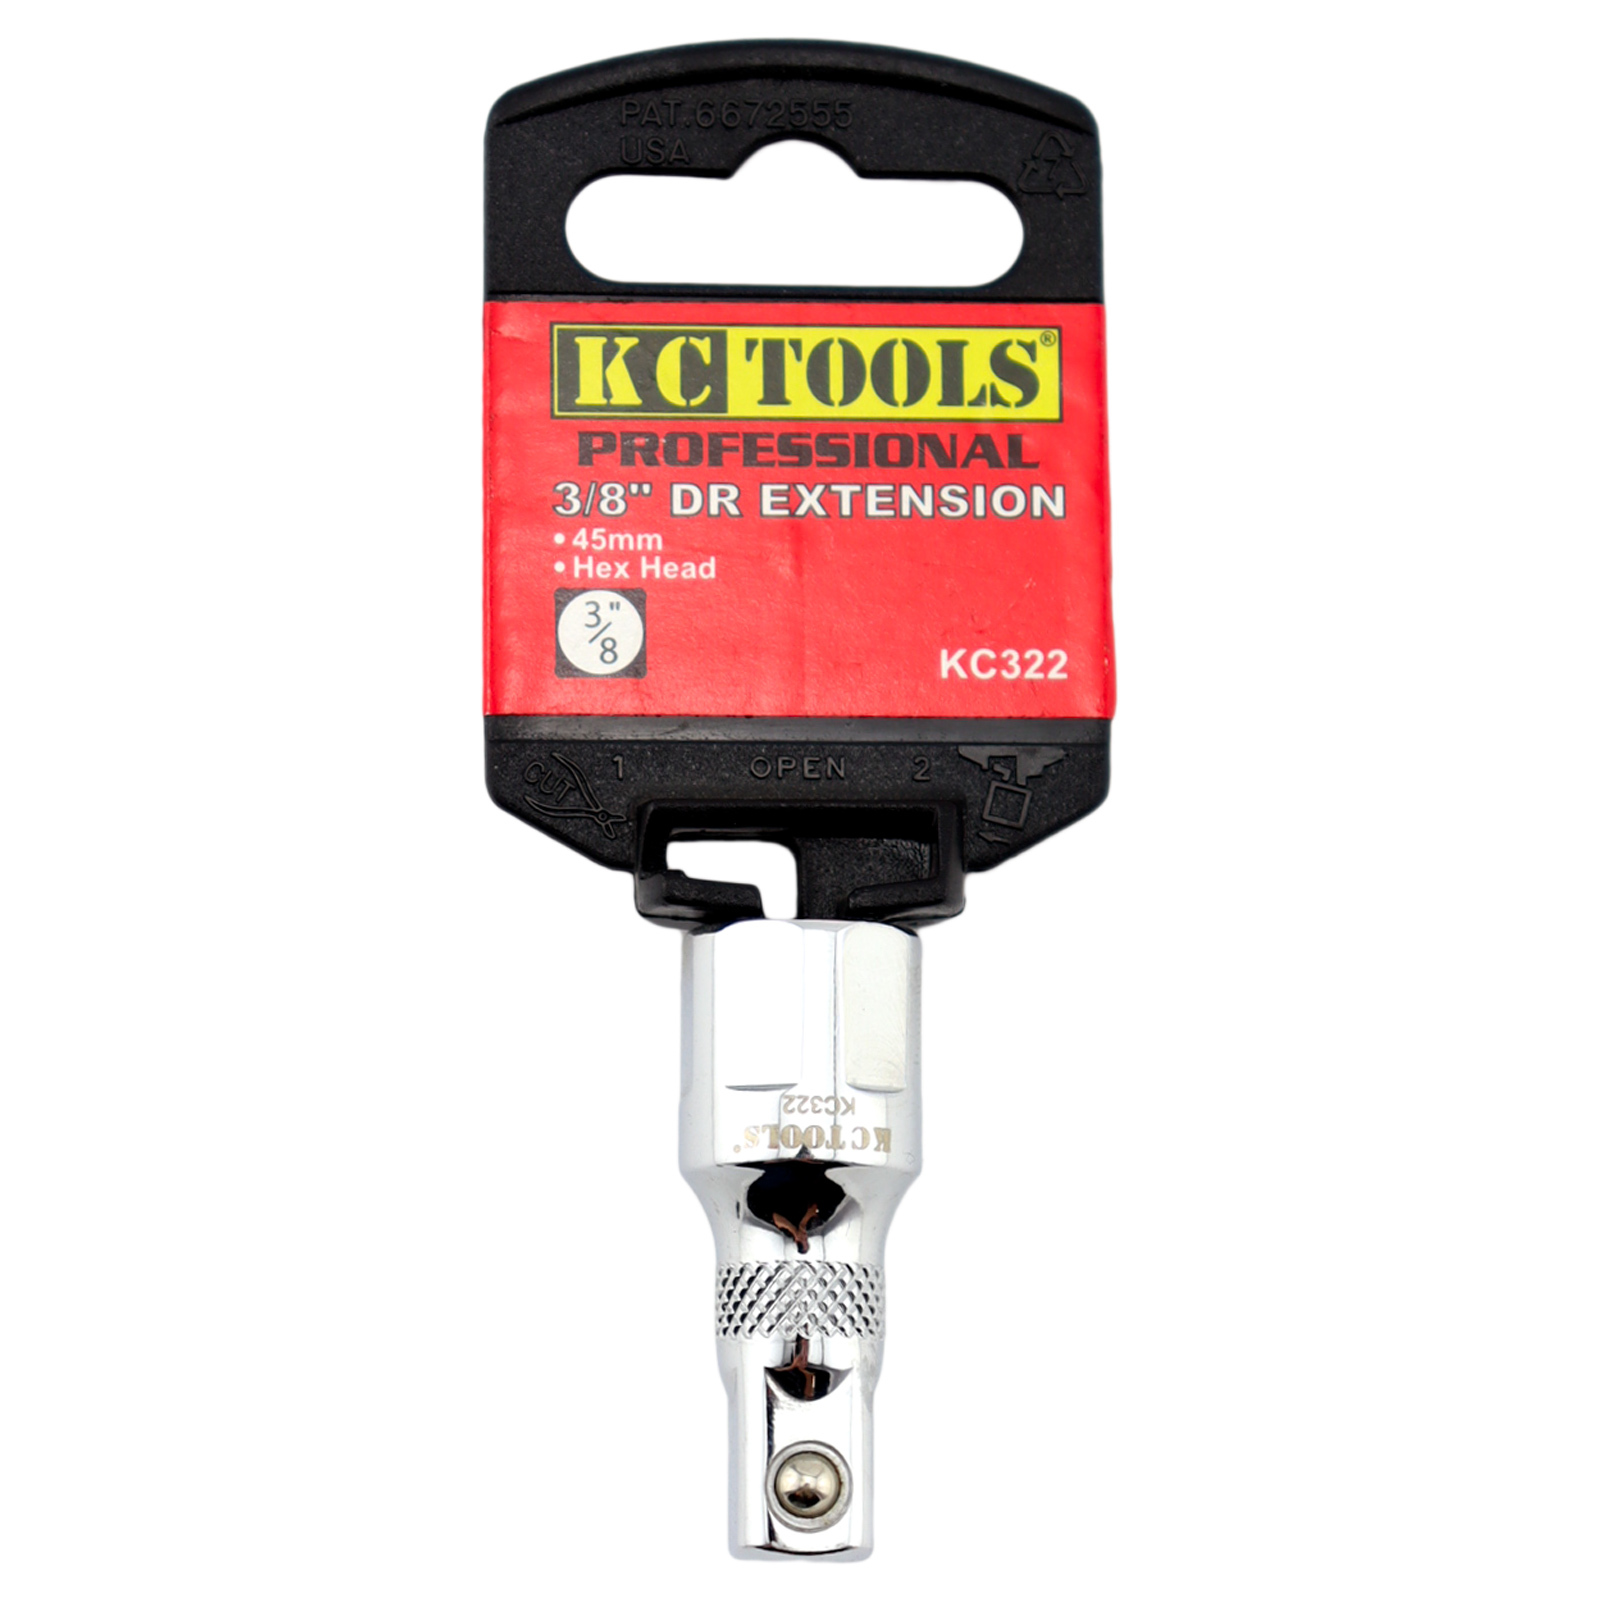 KC Tools 3/8" Dr 45mm Hex Head Extension Bar | Shop Online Now at